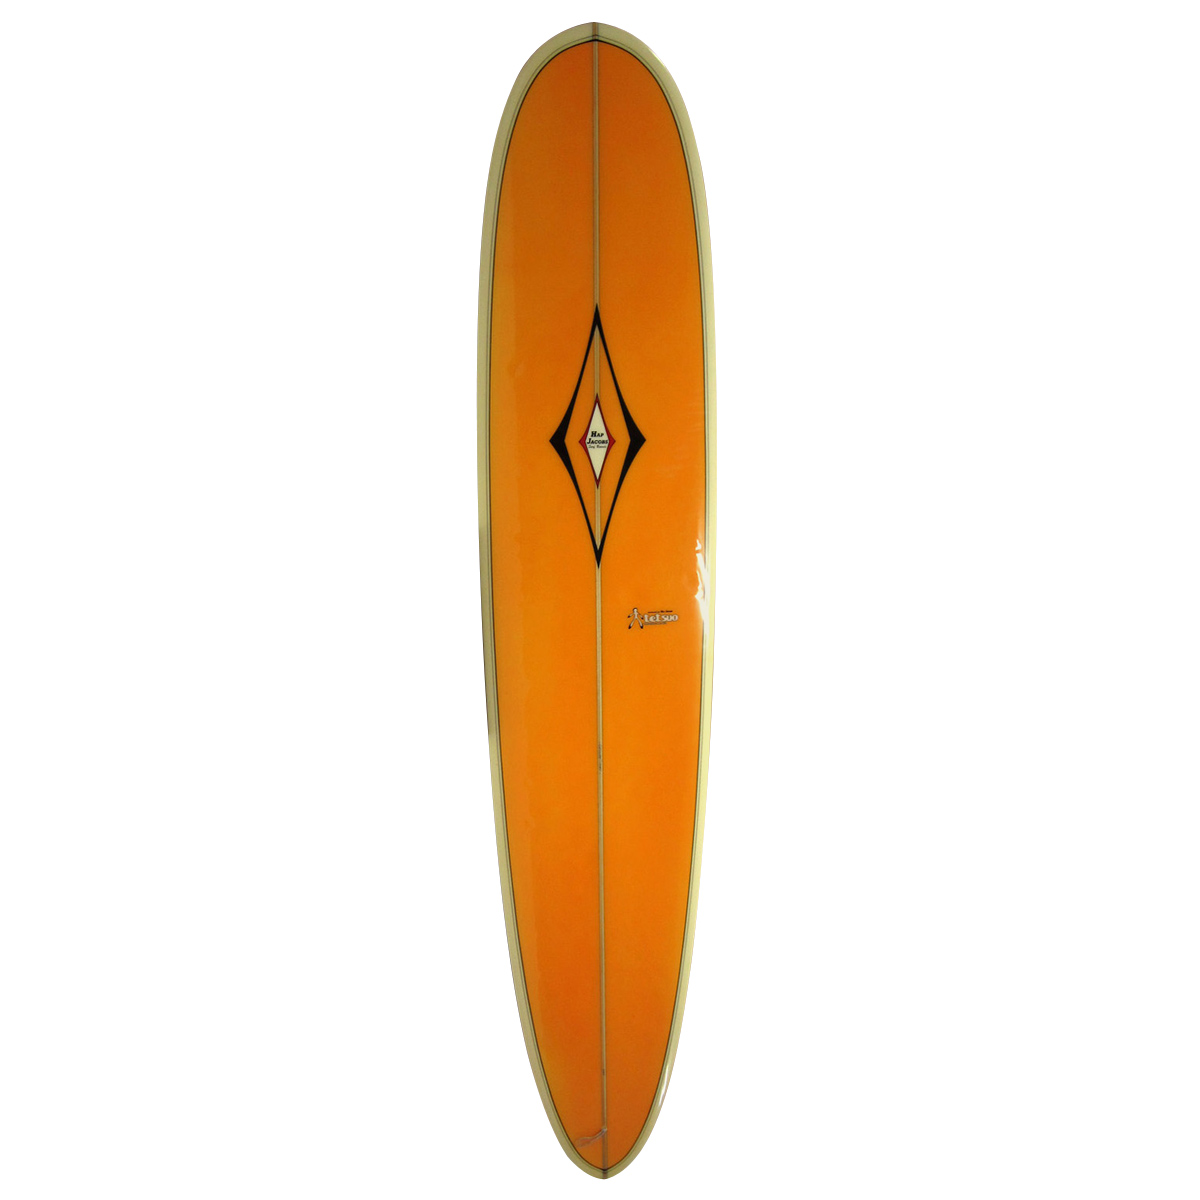 Hap Jacobs surfboard  9.4 ロングボード